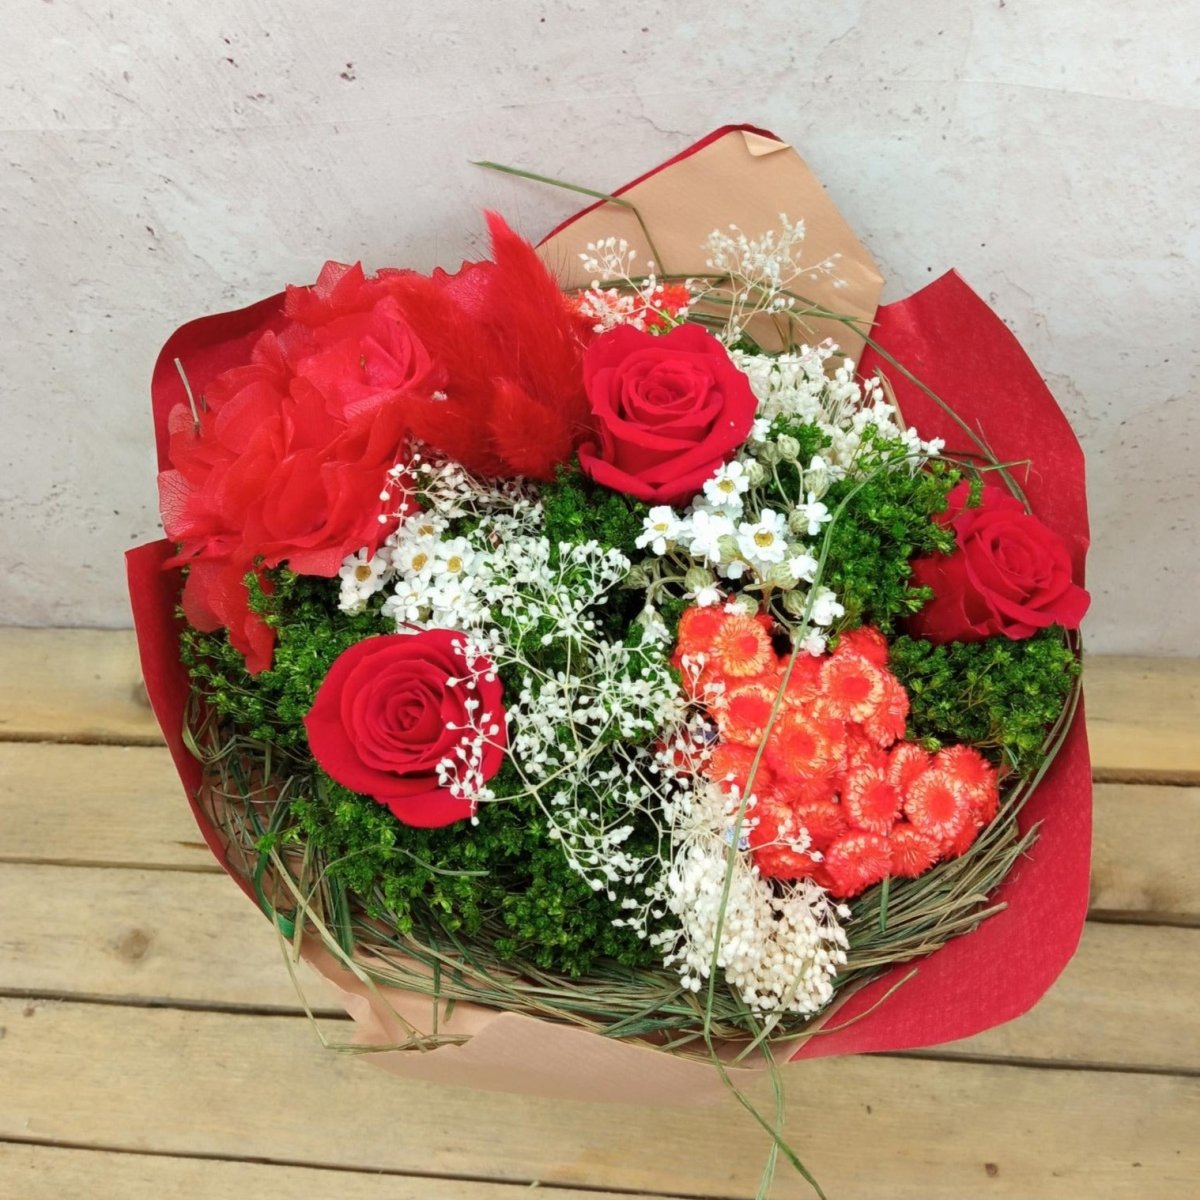 Bouquet con flores eternas rojas